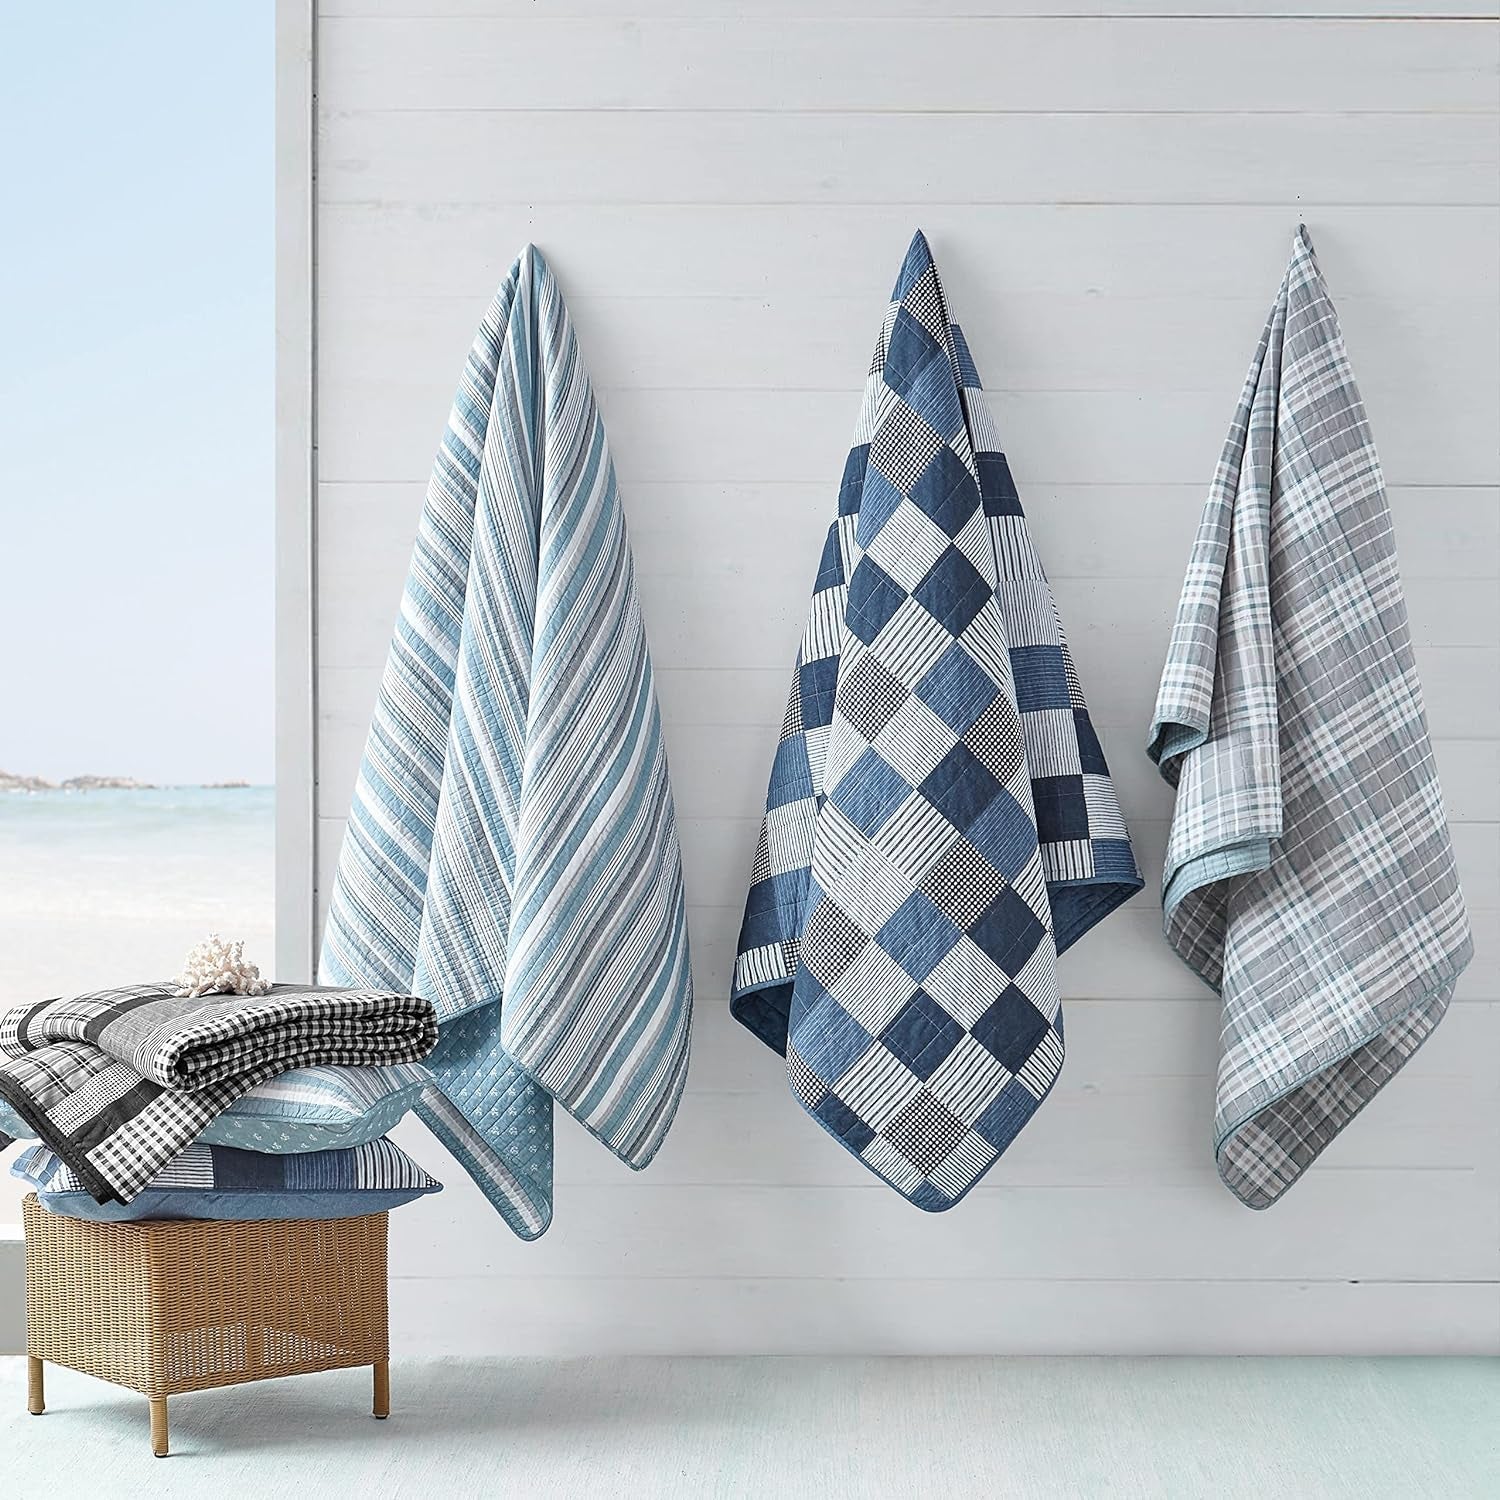 Nautica - Queen Quilt Set, Cotton Reversible Bedding with Matching Shams, Home Decor for All Seasons (Saltmarsh Blue, Queen)